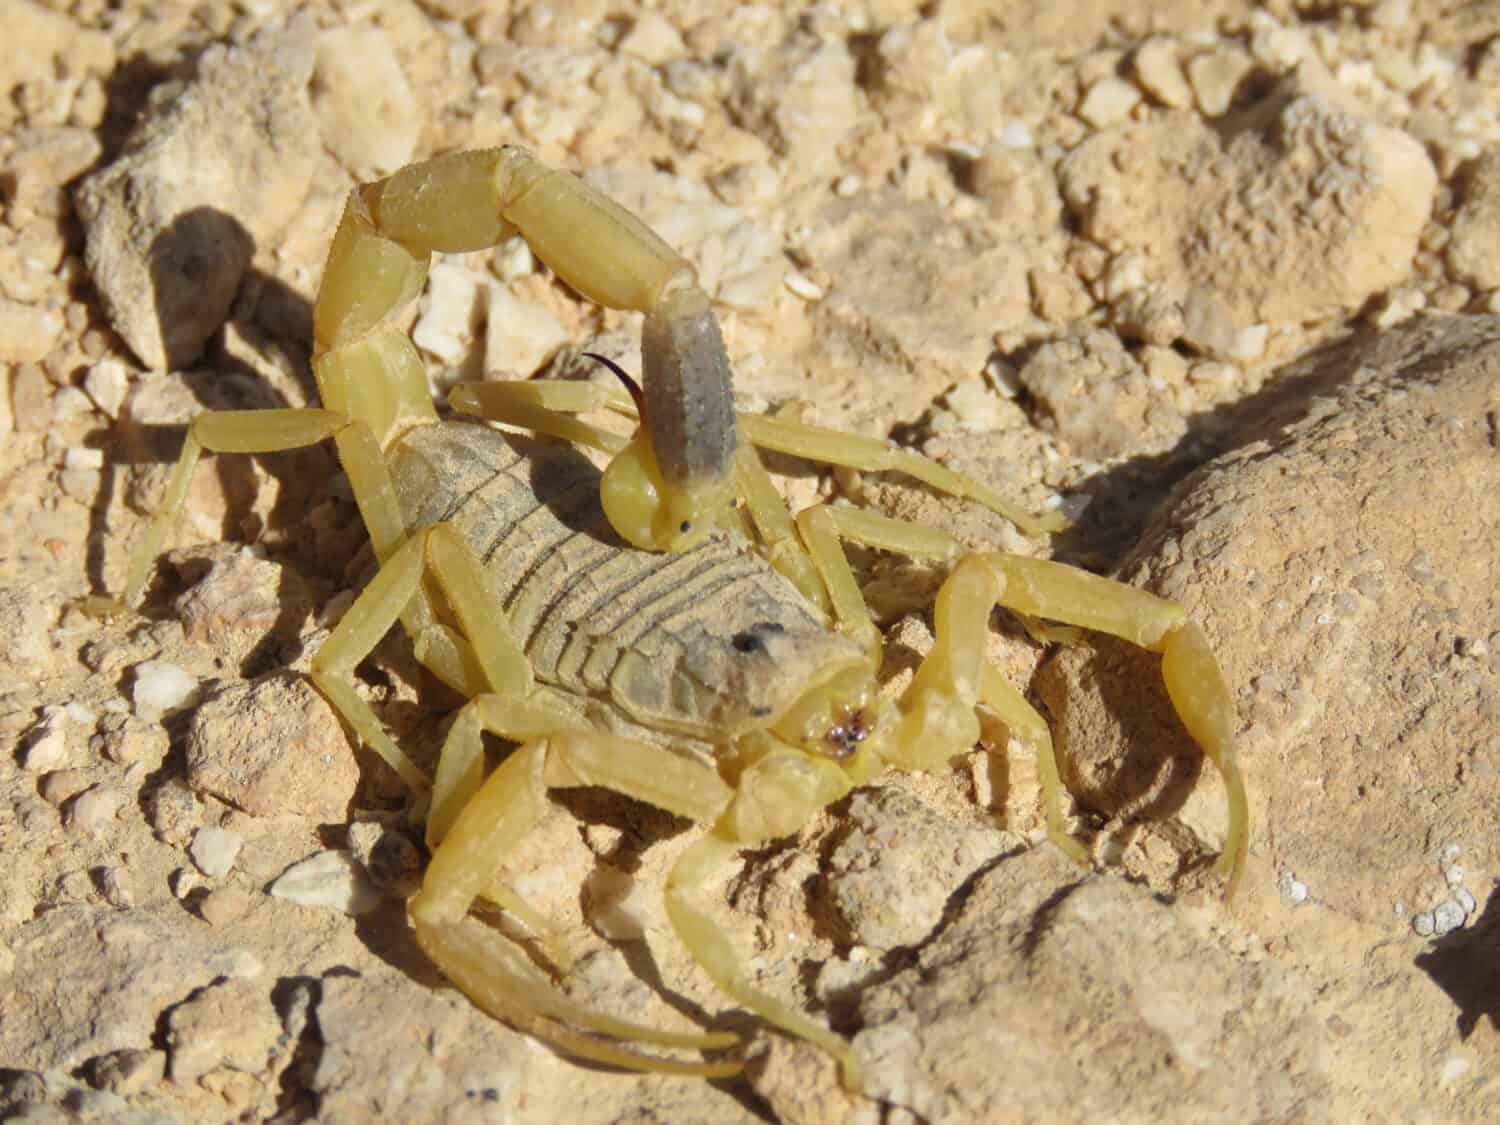 Deathstalker Scorpion in the Negev Desert, Israel